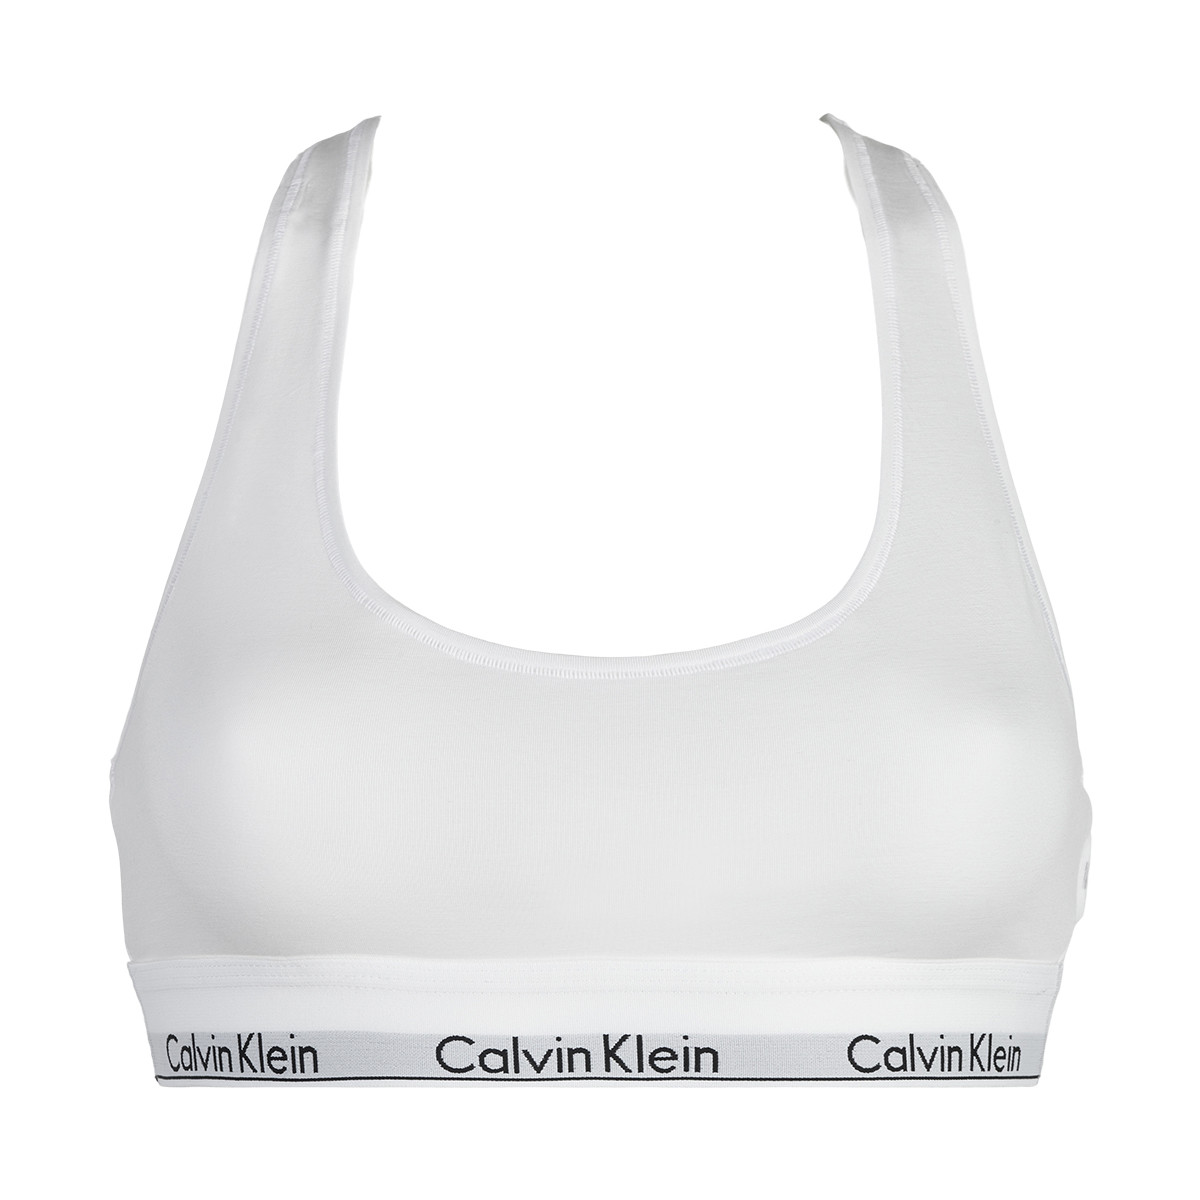 Calvin Klein Lingeri Bralette, Farve: Hvid, Størrelse: XL, Dame